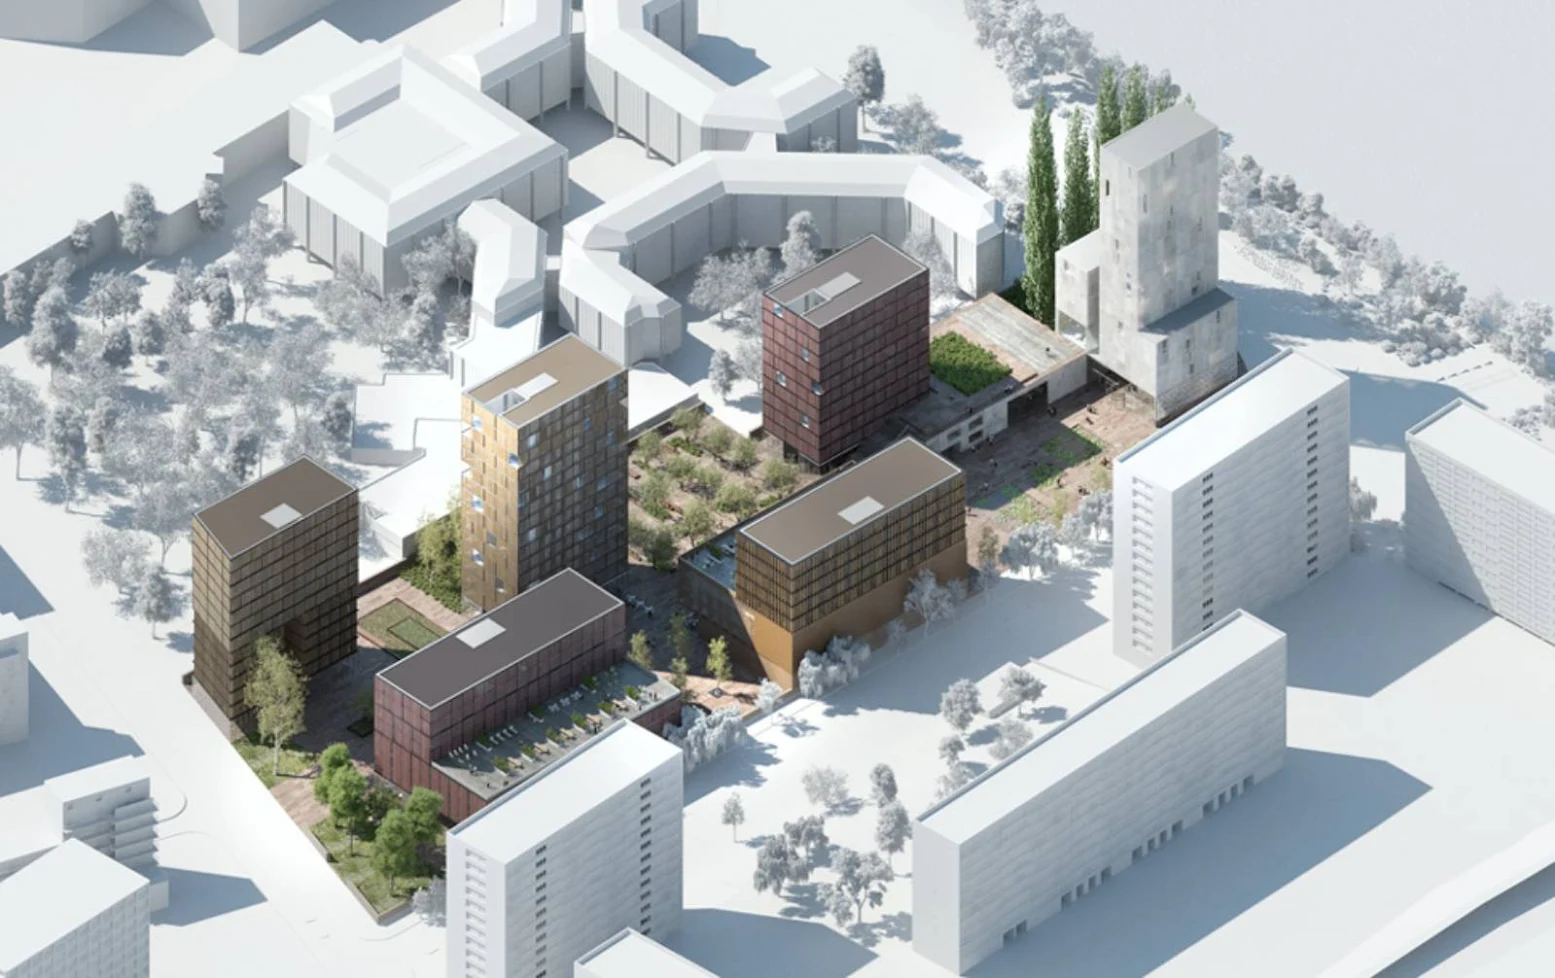 Urban regeneration by LAN Architecture